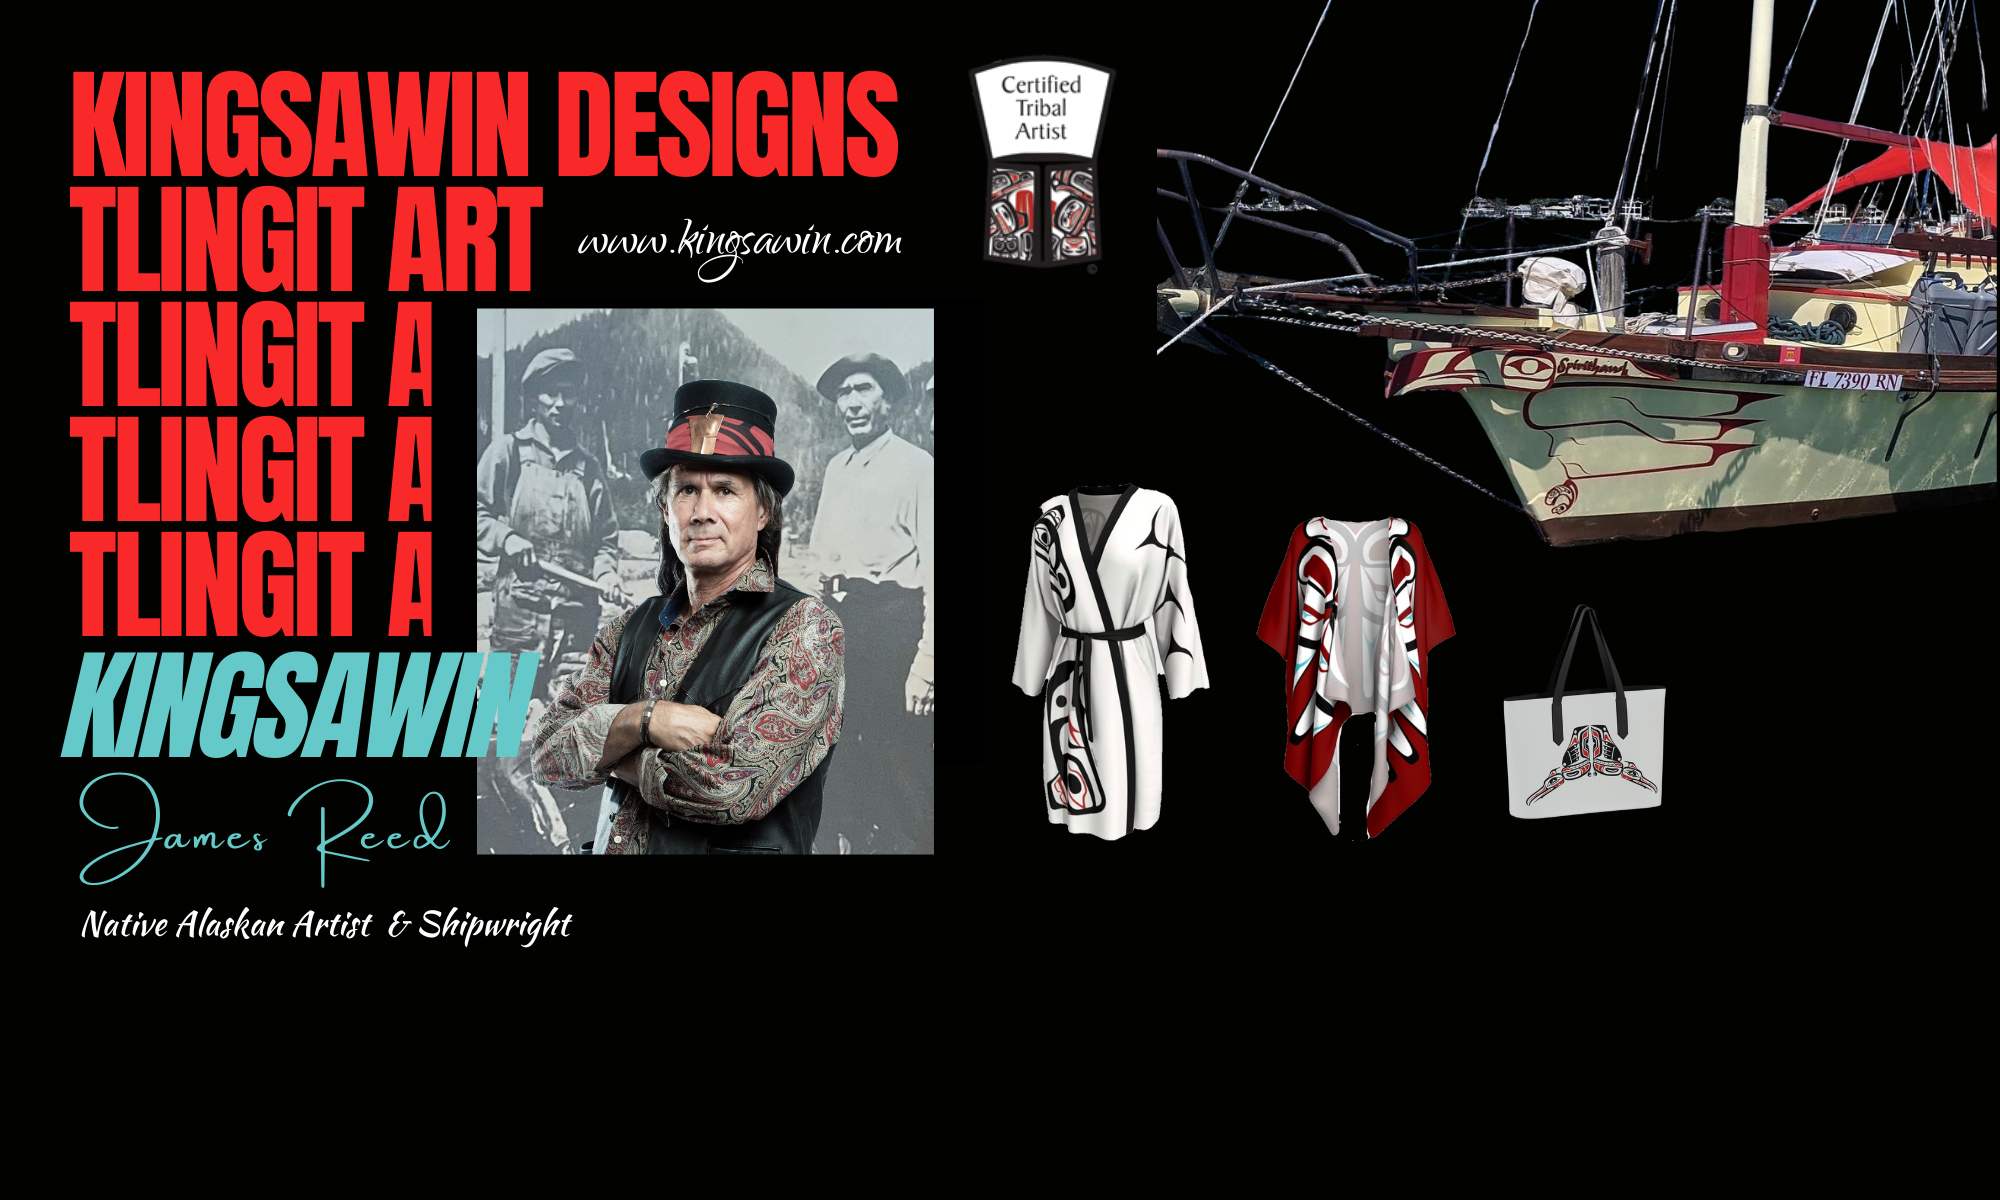 Kingsawin designs banner - image